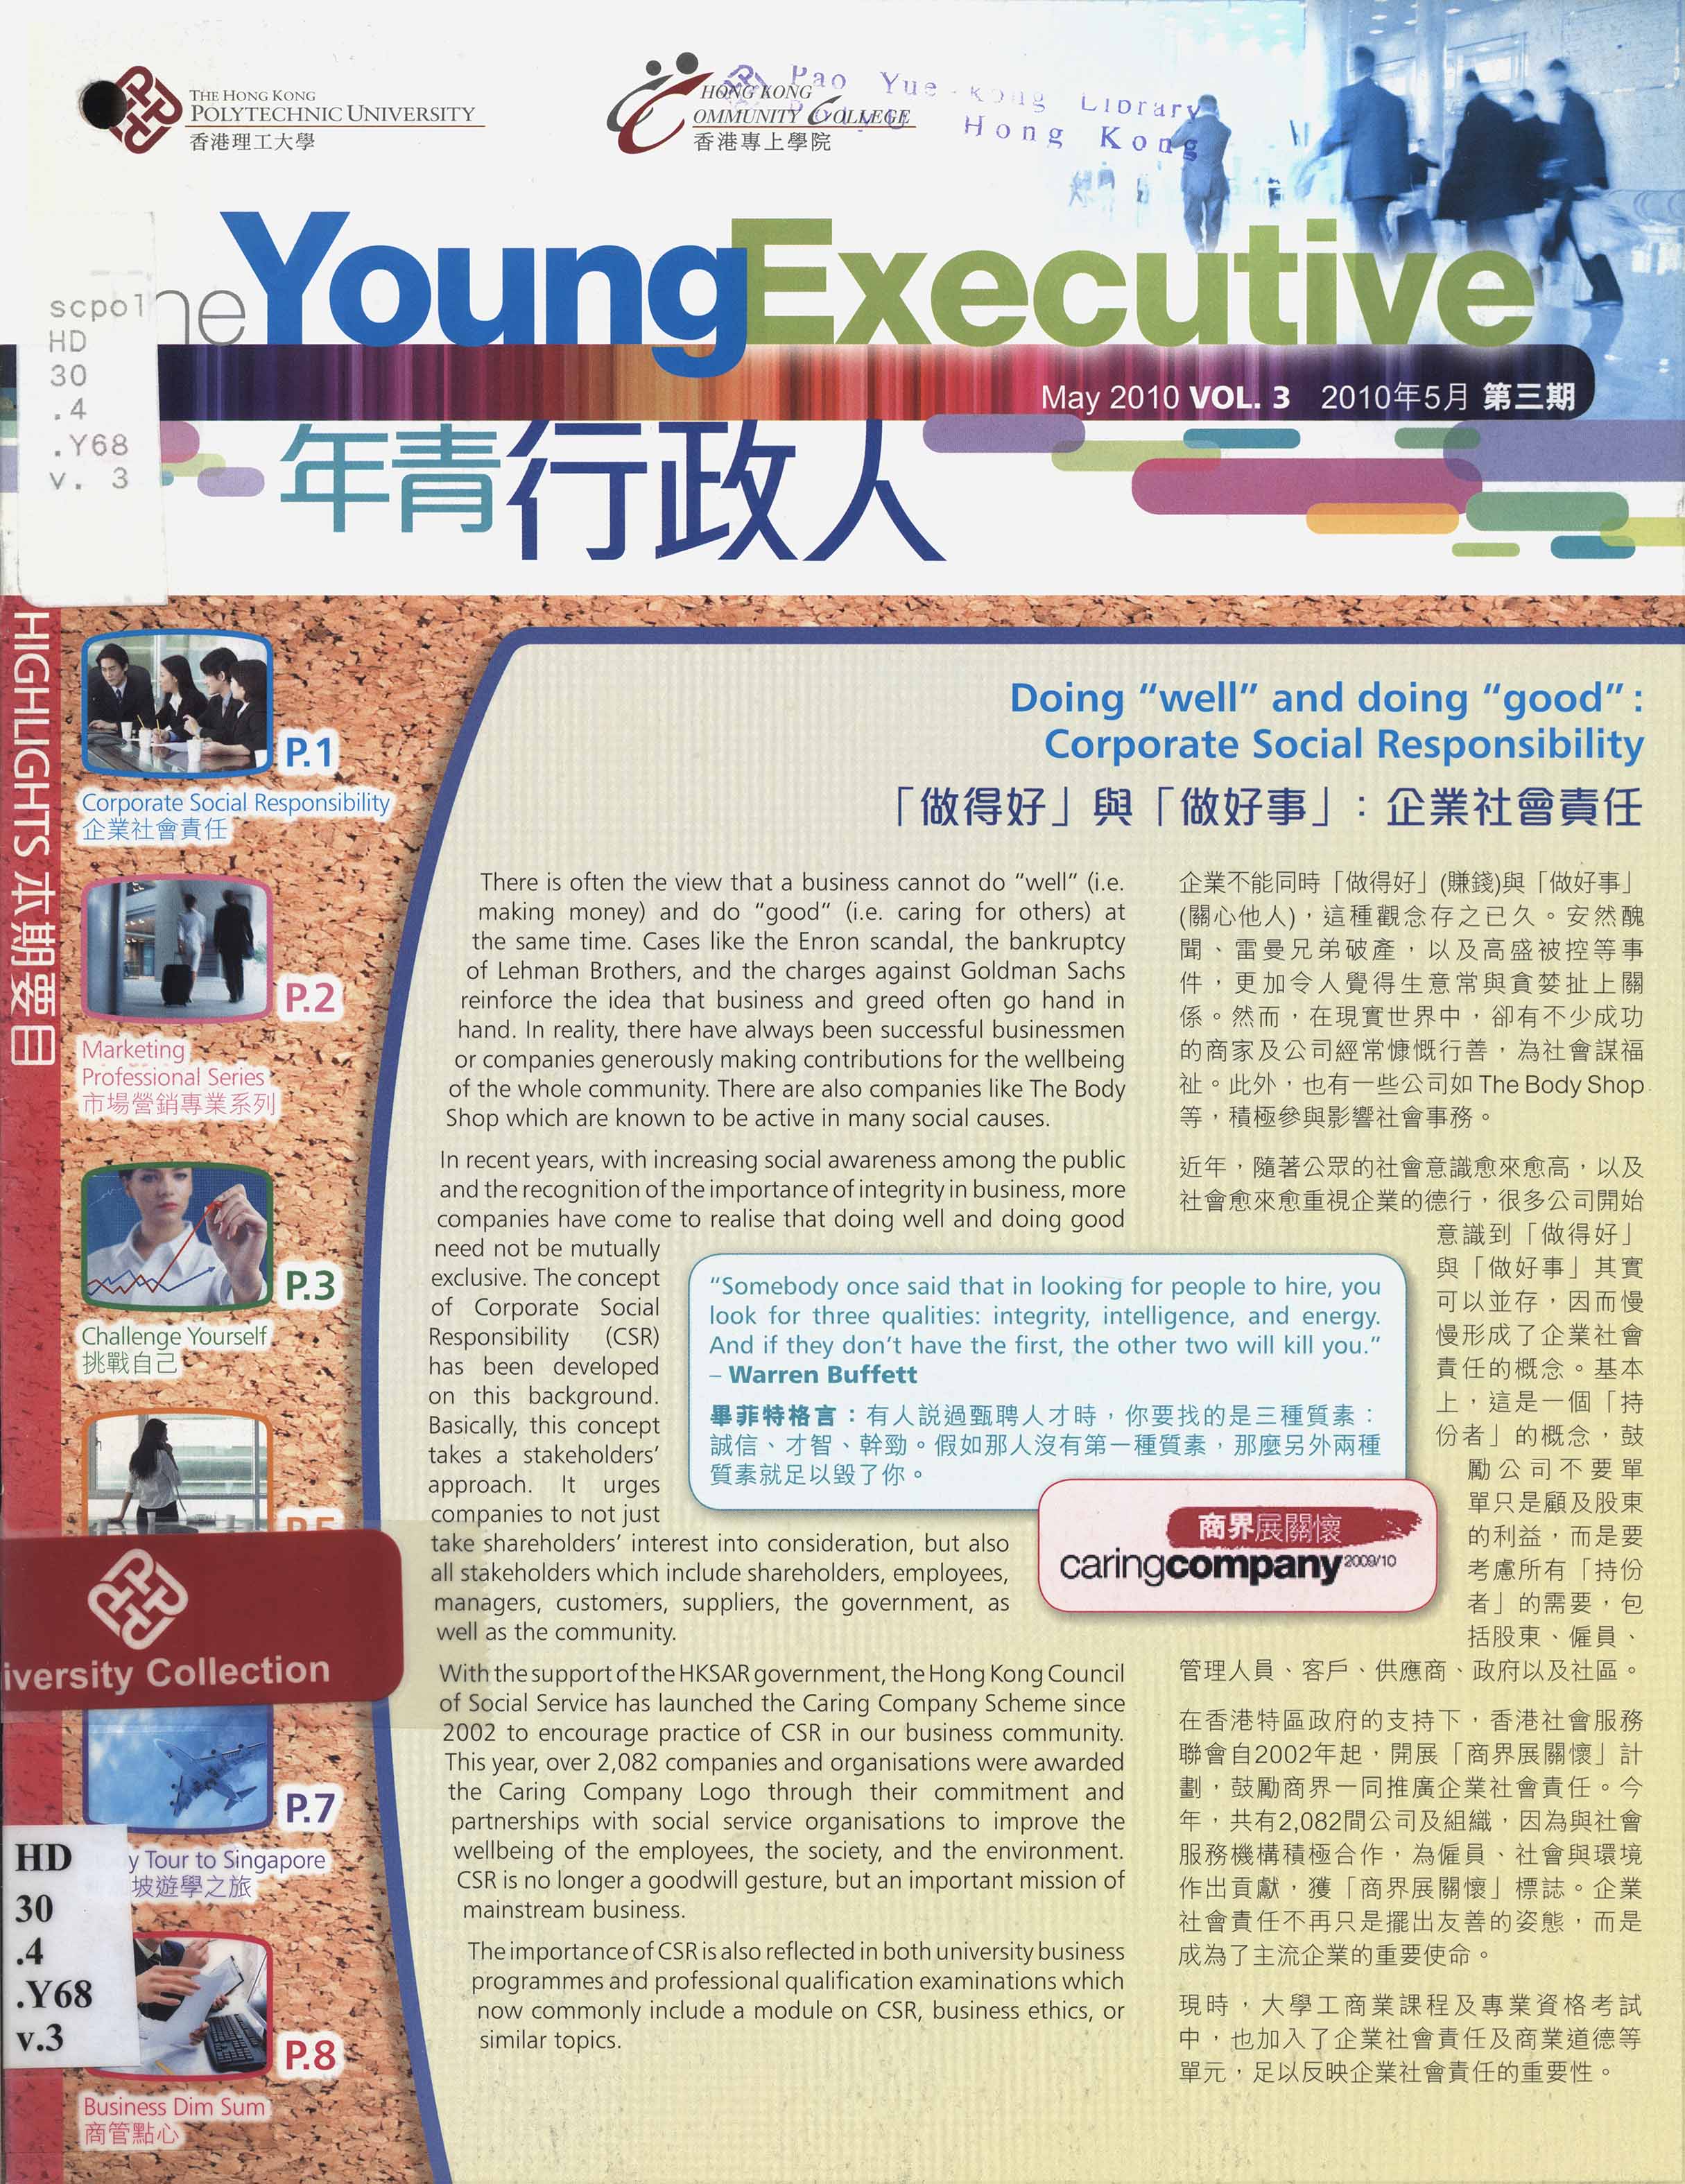 The Young executive. Vol. 3